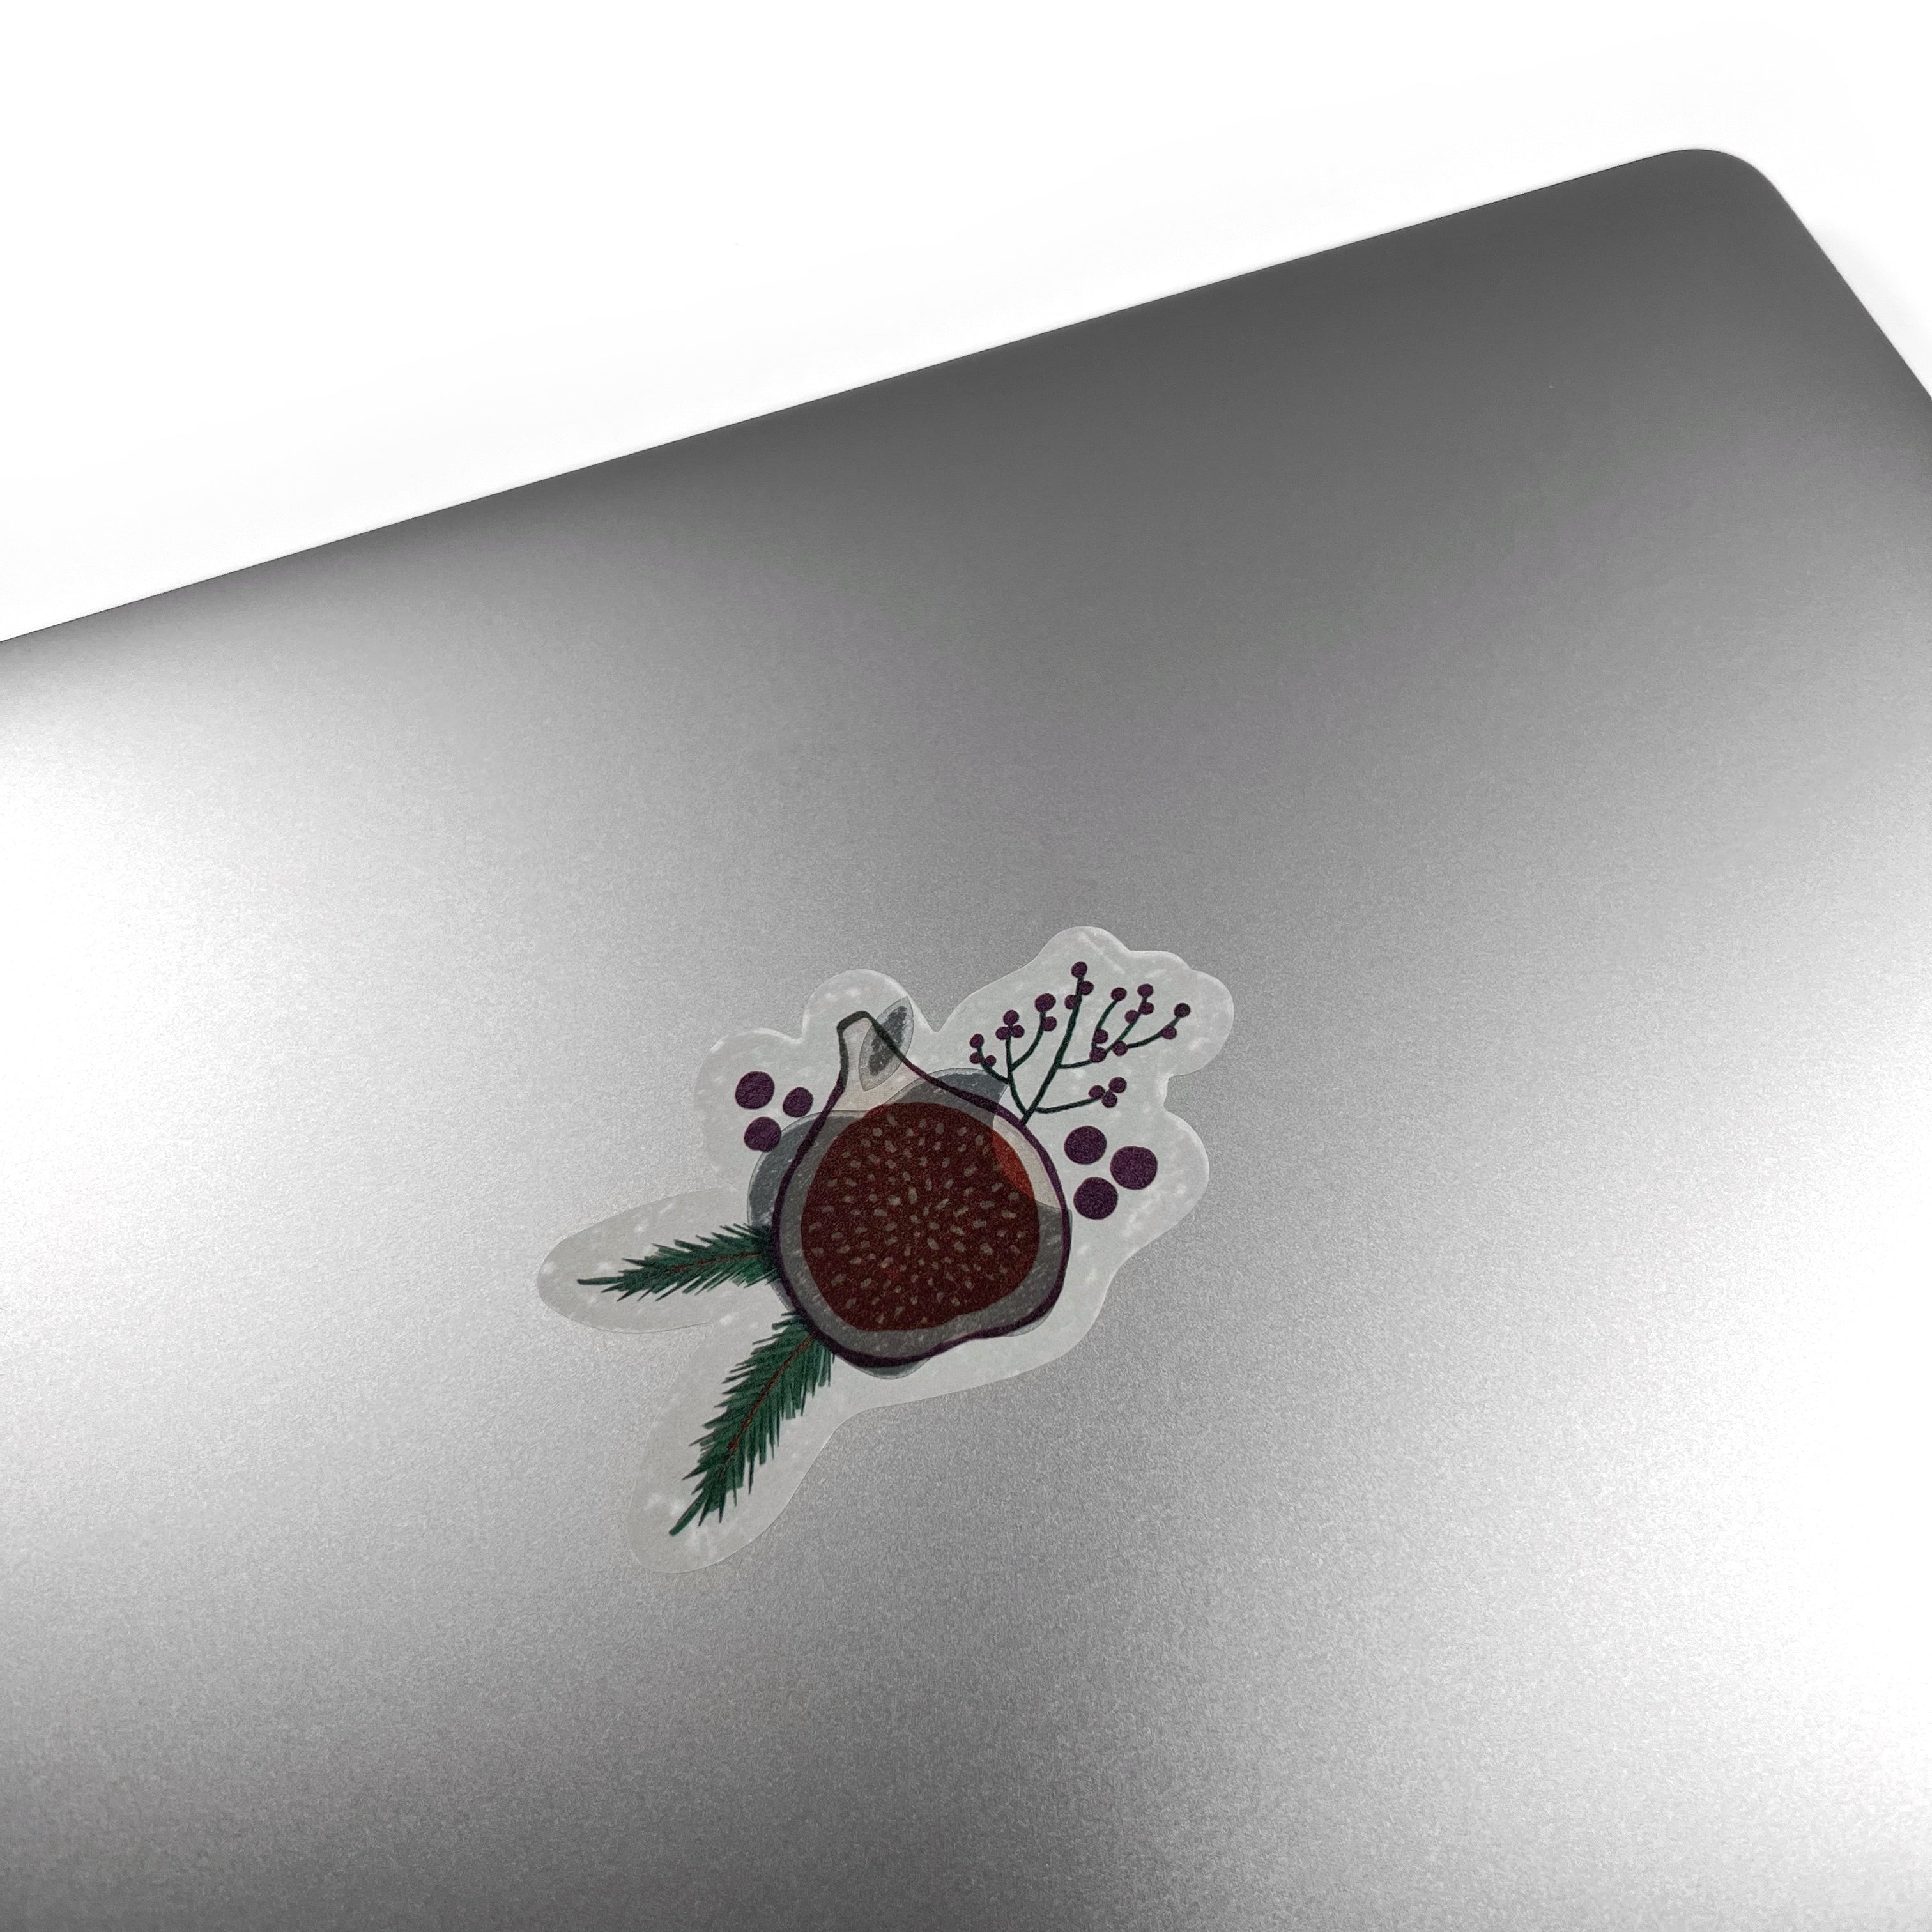 sticker on laptop